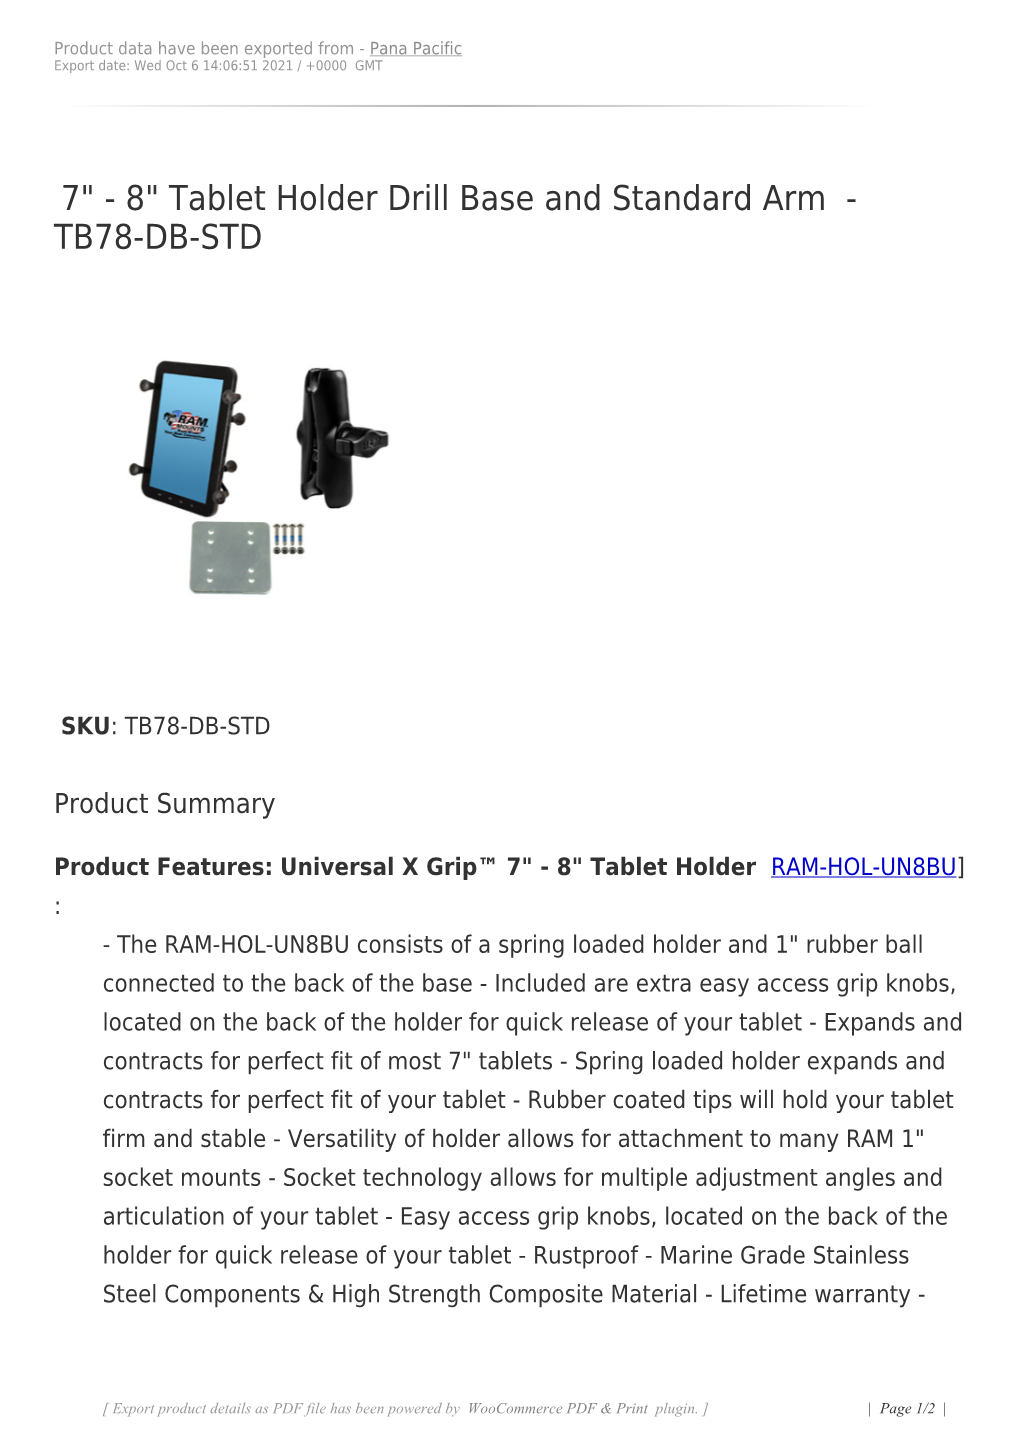 7" - 8" Tablet Holder Drill Base and Standard Arm - TB78-DB-STD